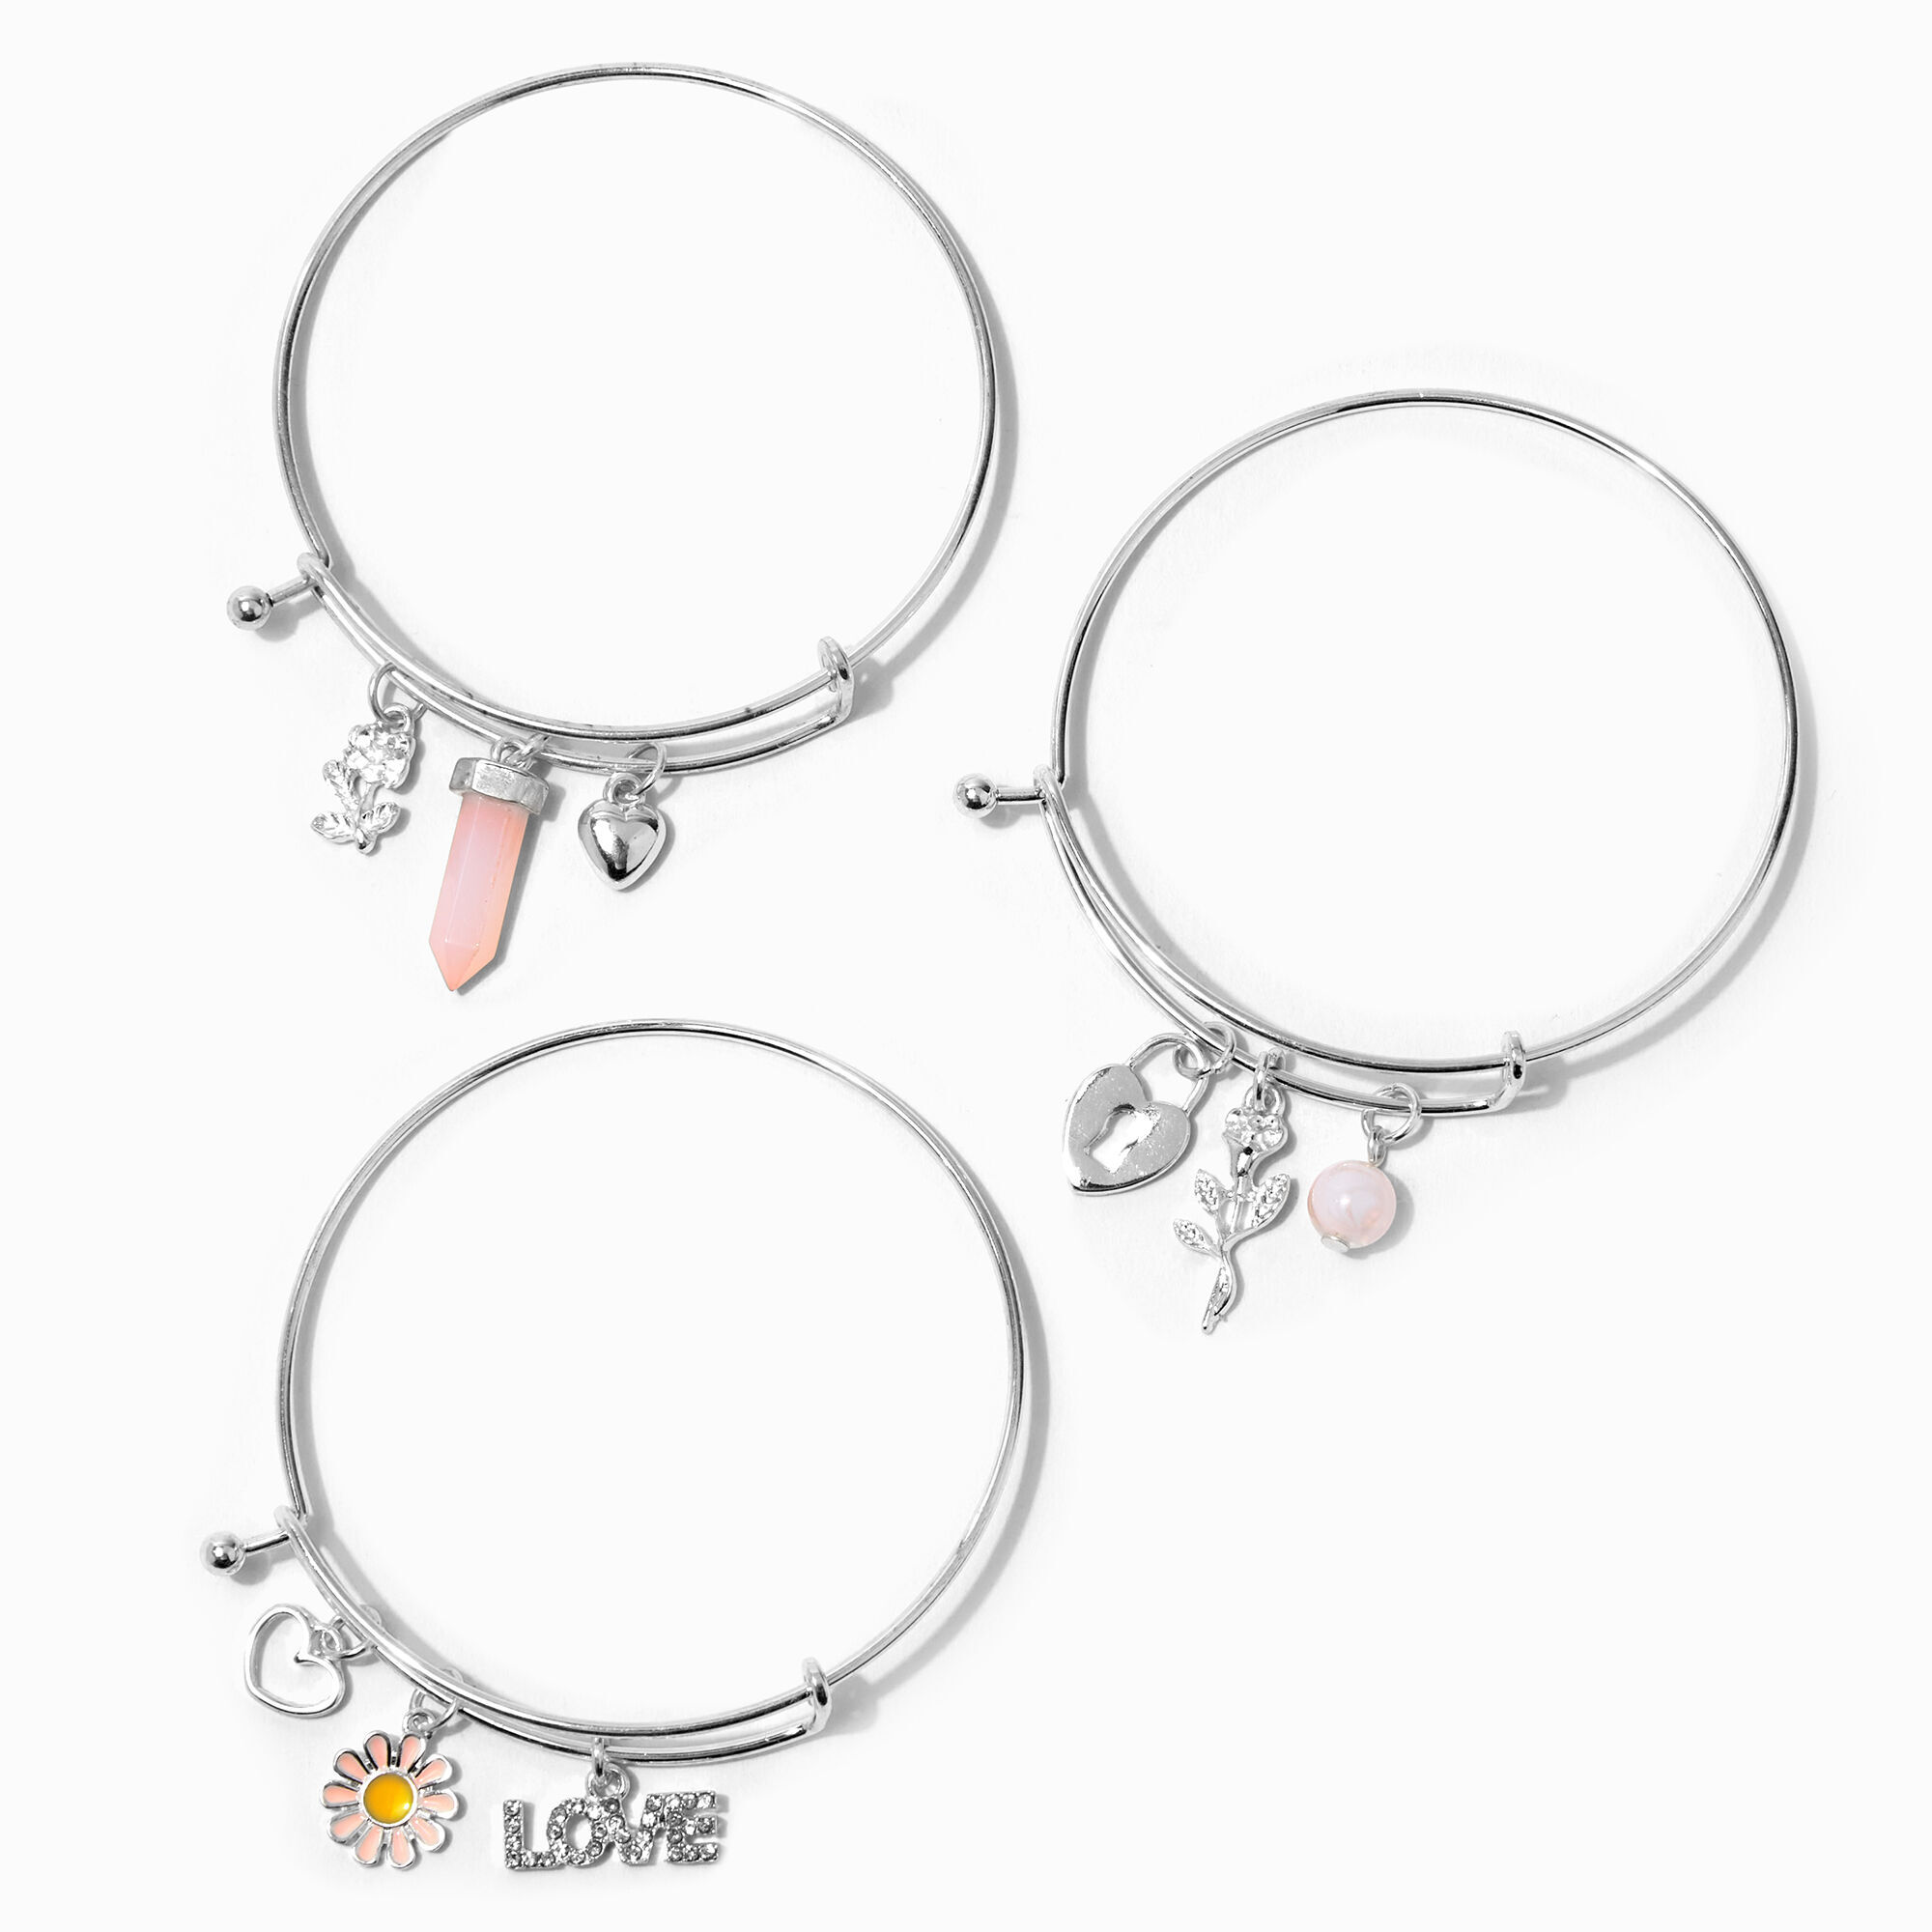 Silver Love Charms Adjustable Bangle Bracelets - 3 Pack